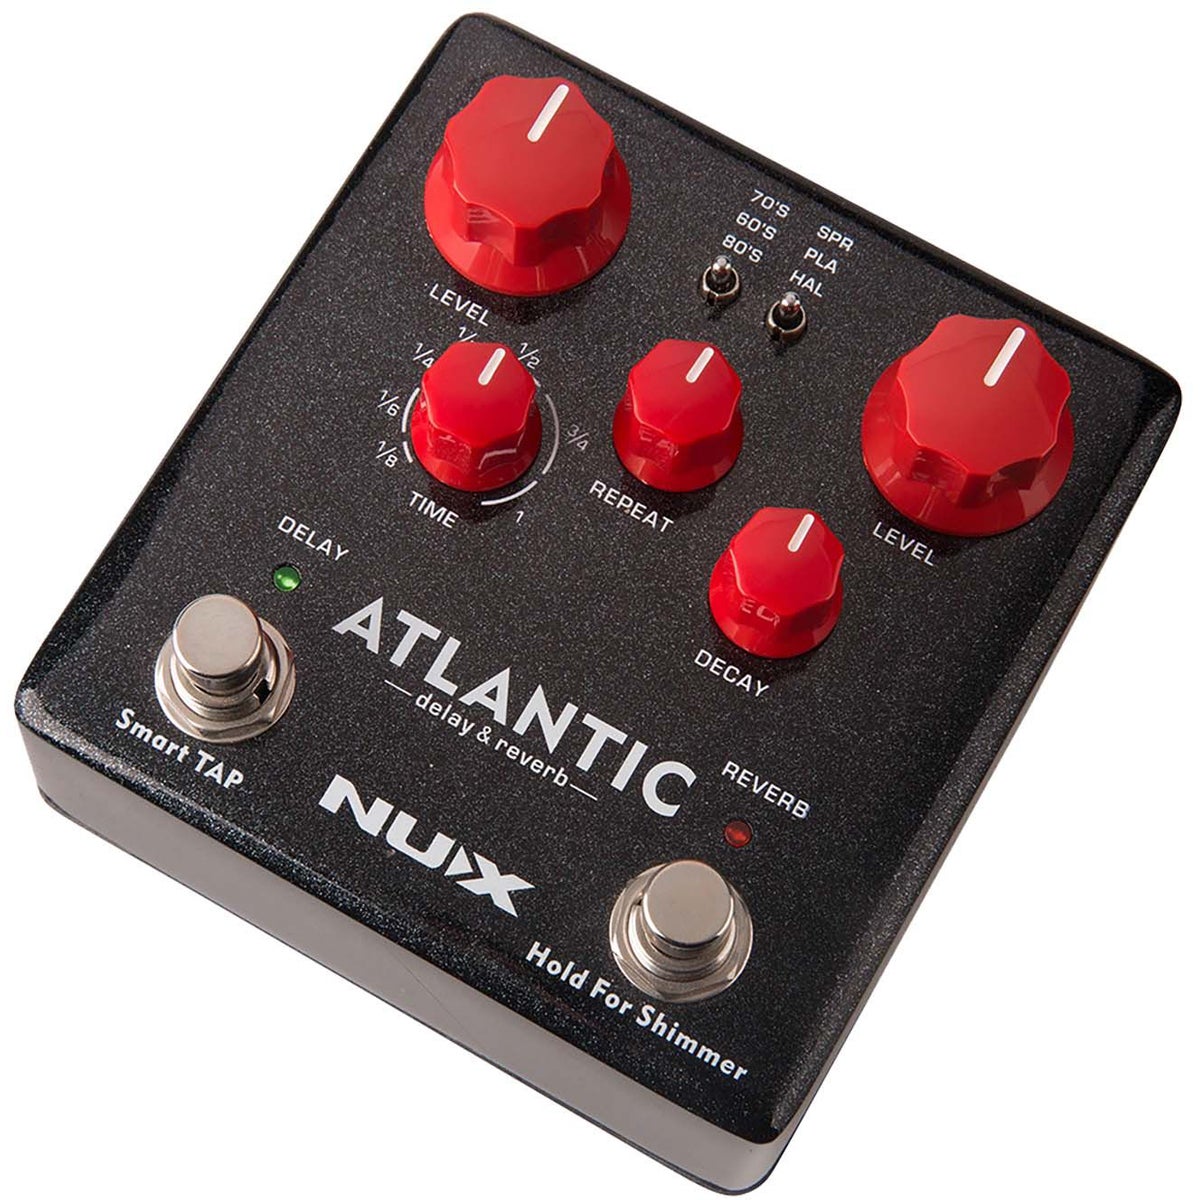 Nux Atlantic delay & reverb guitar-pedal